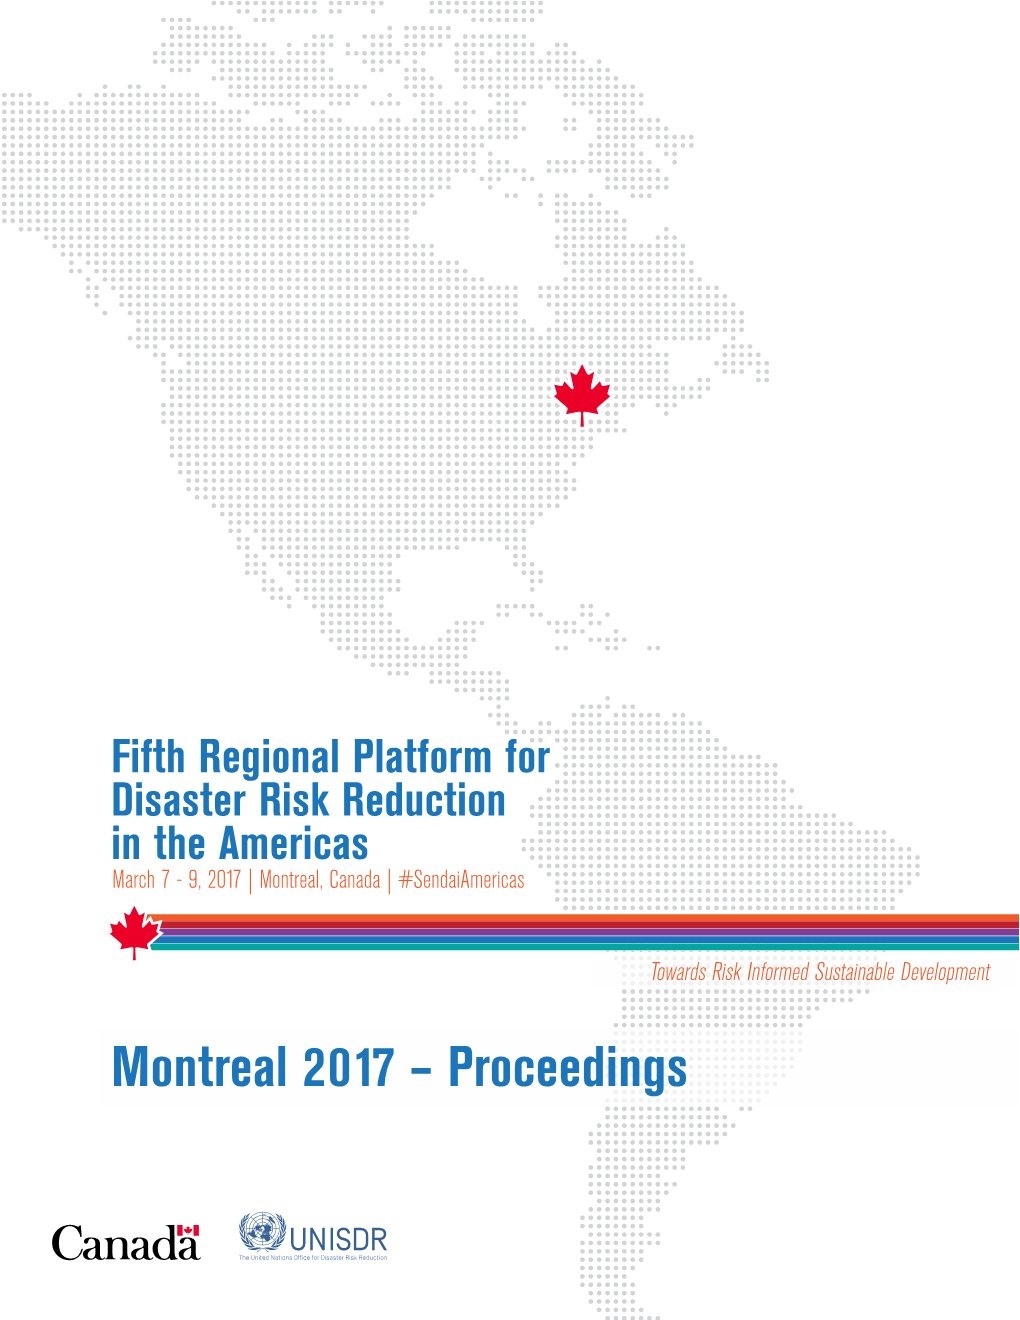 Montreal 2017 – Proceedings